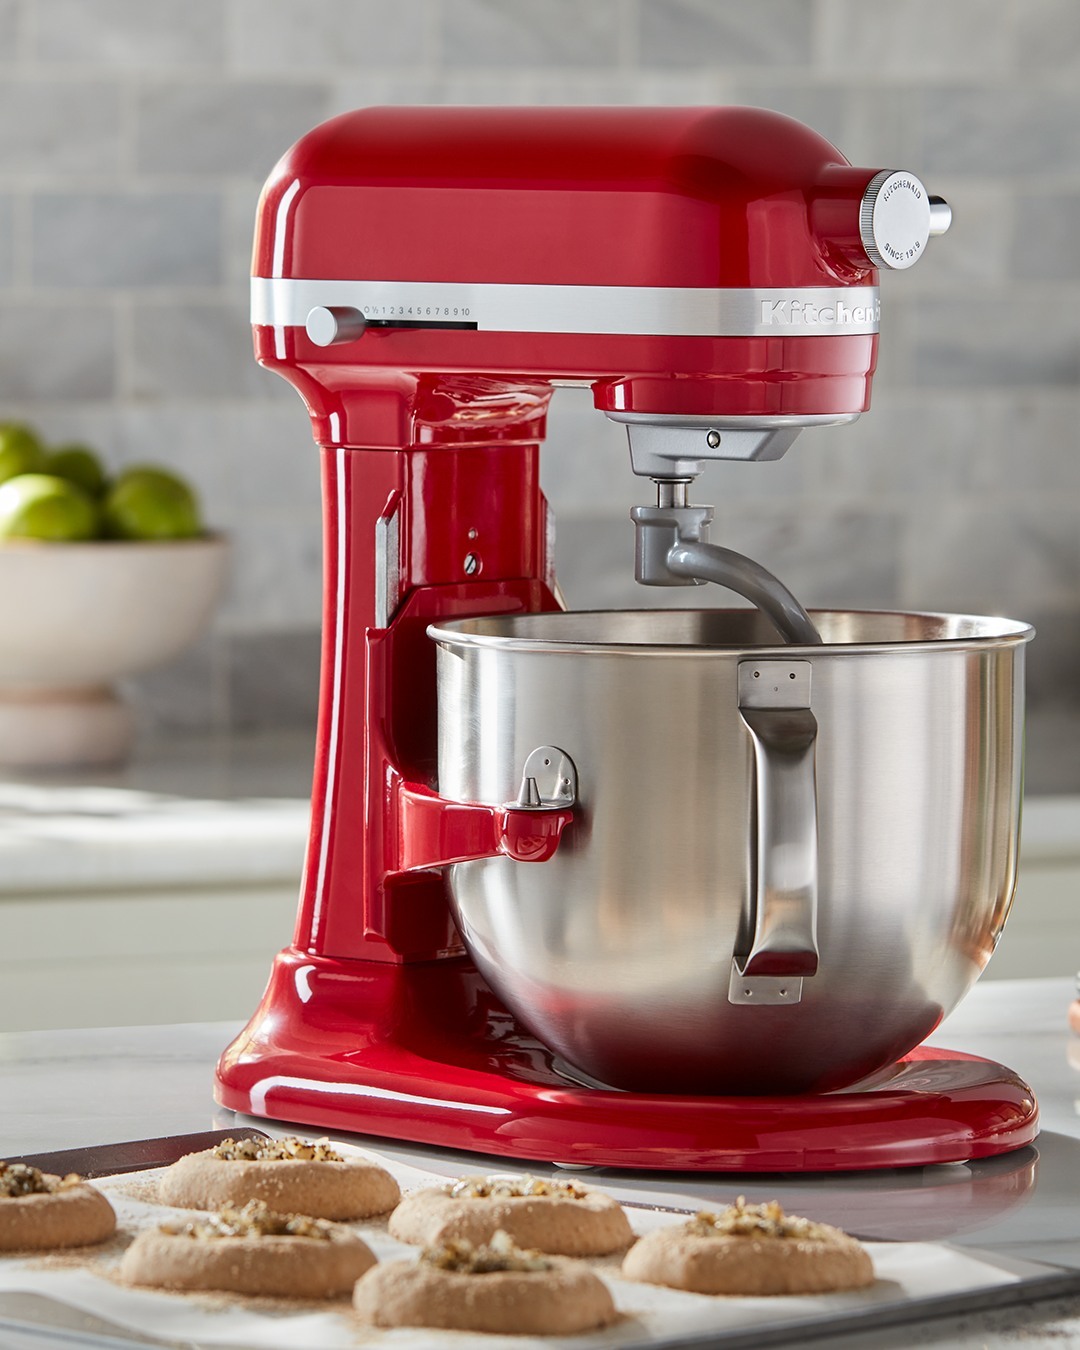 image of a red kitchenaid mixer